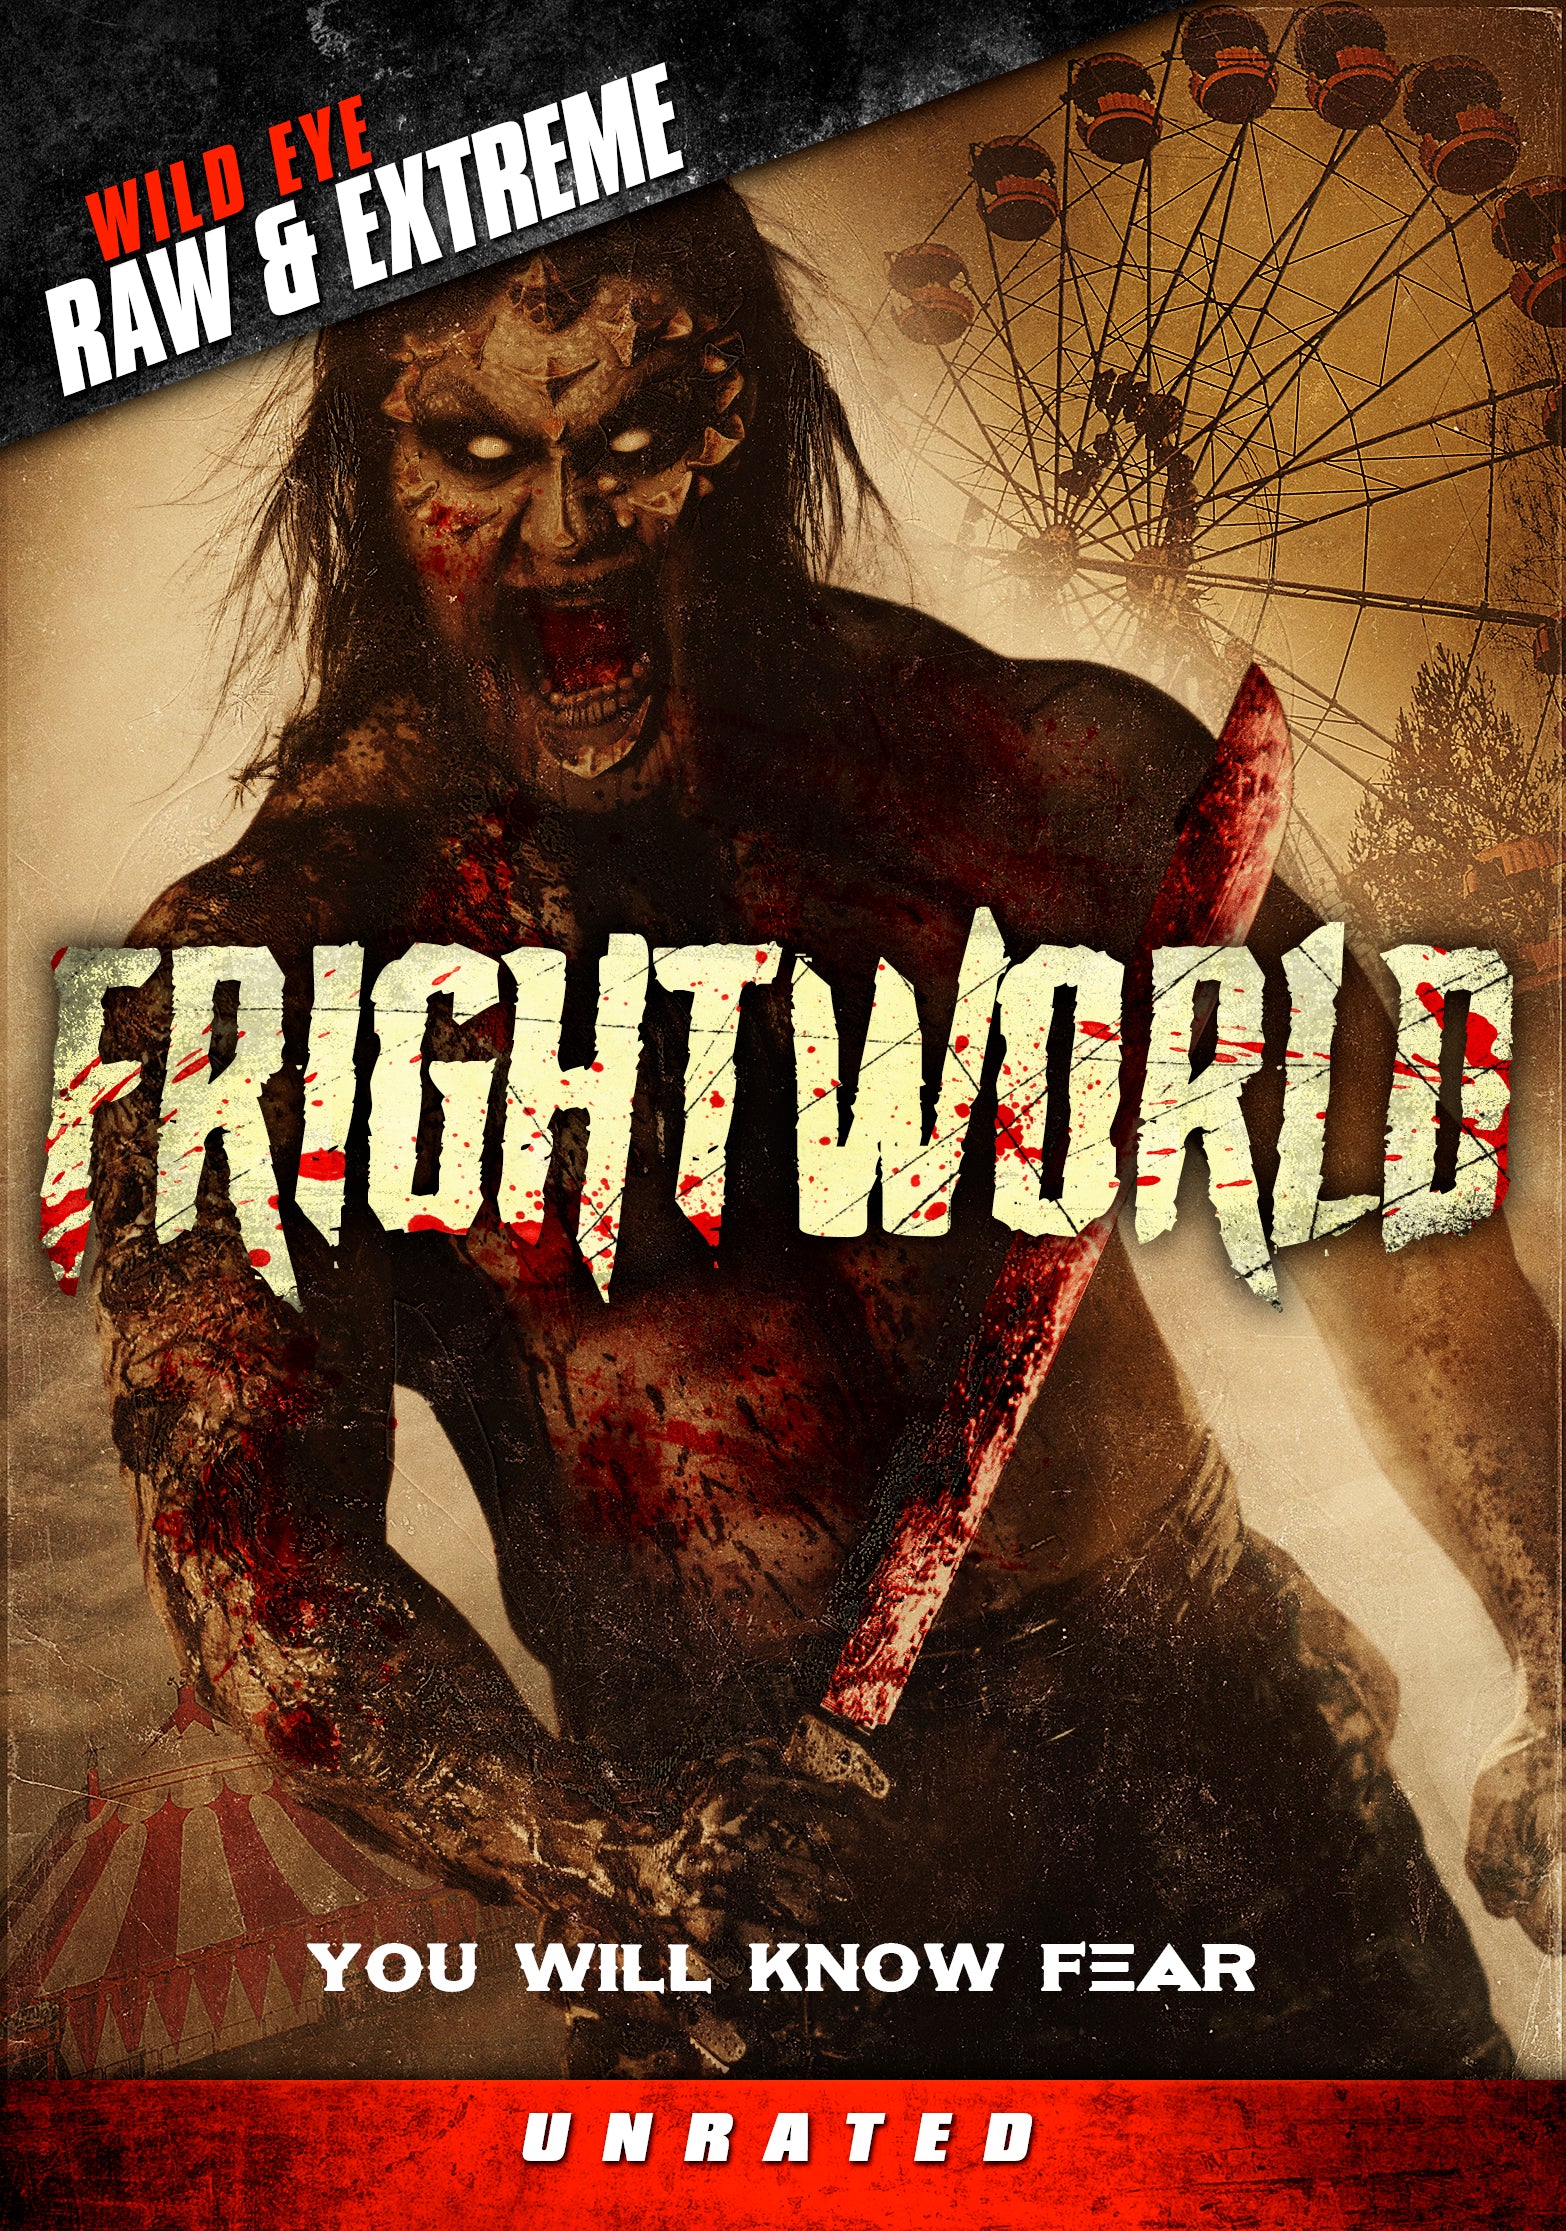 Frightworld cover art